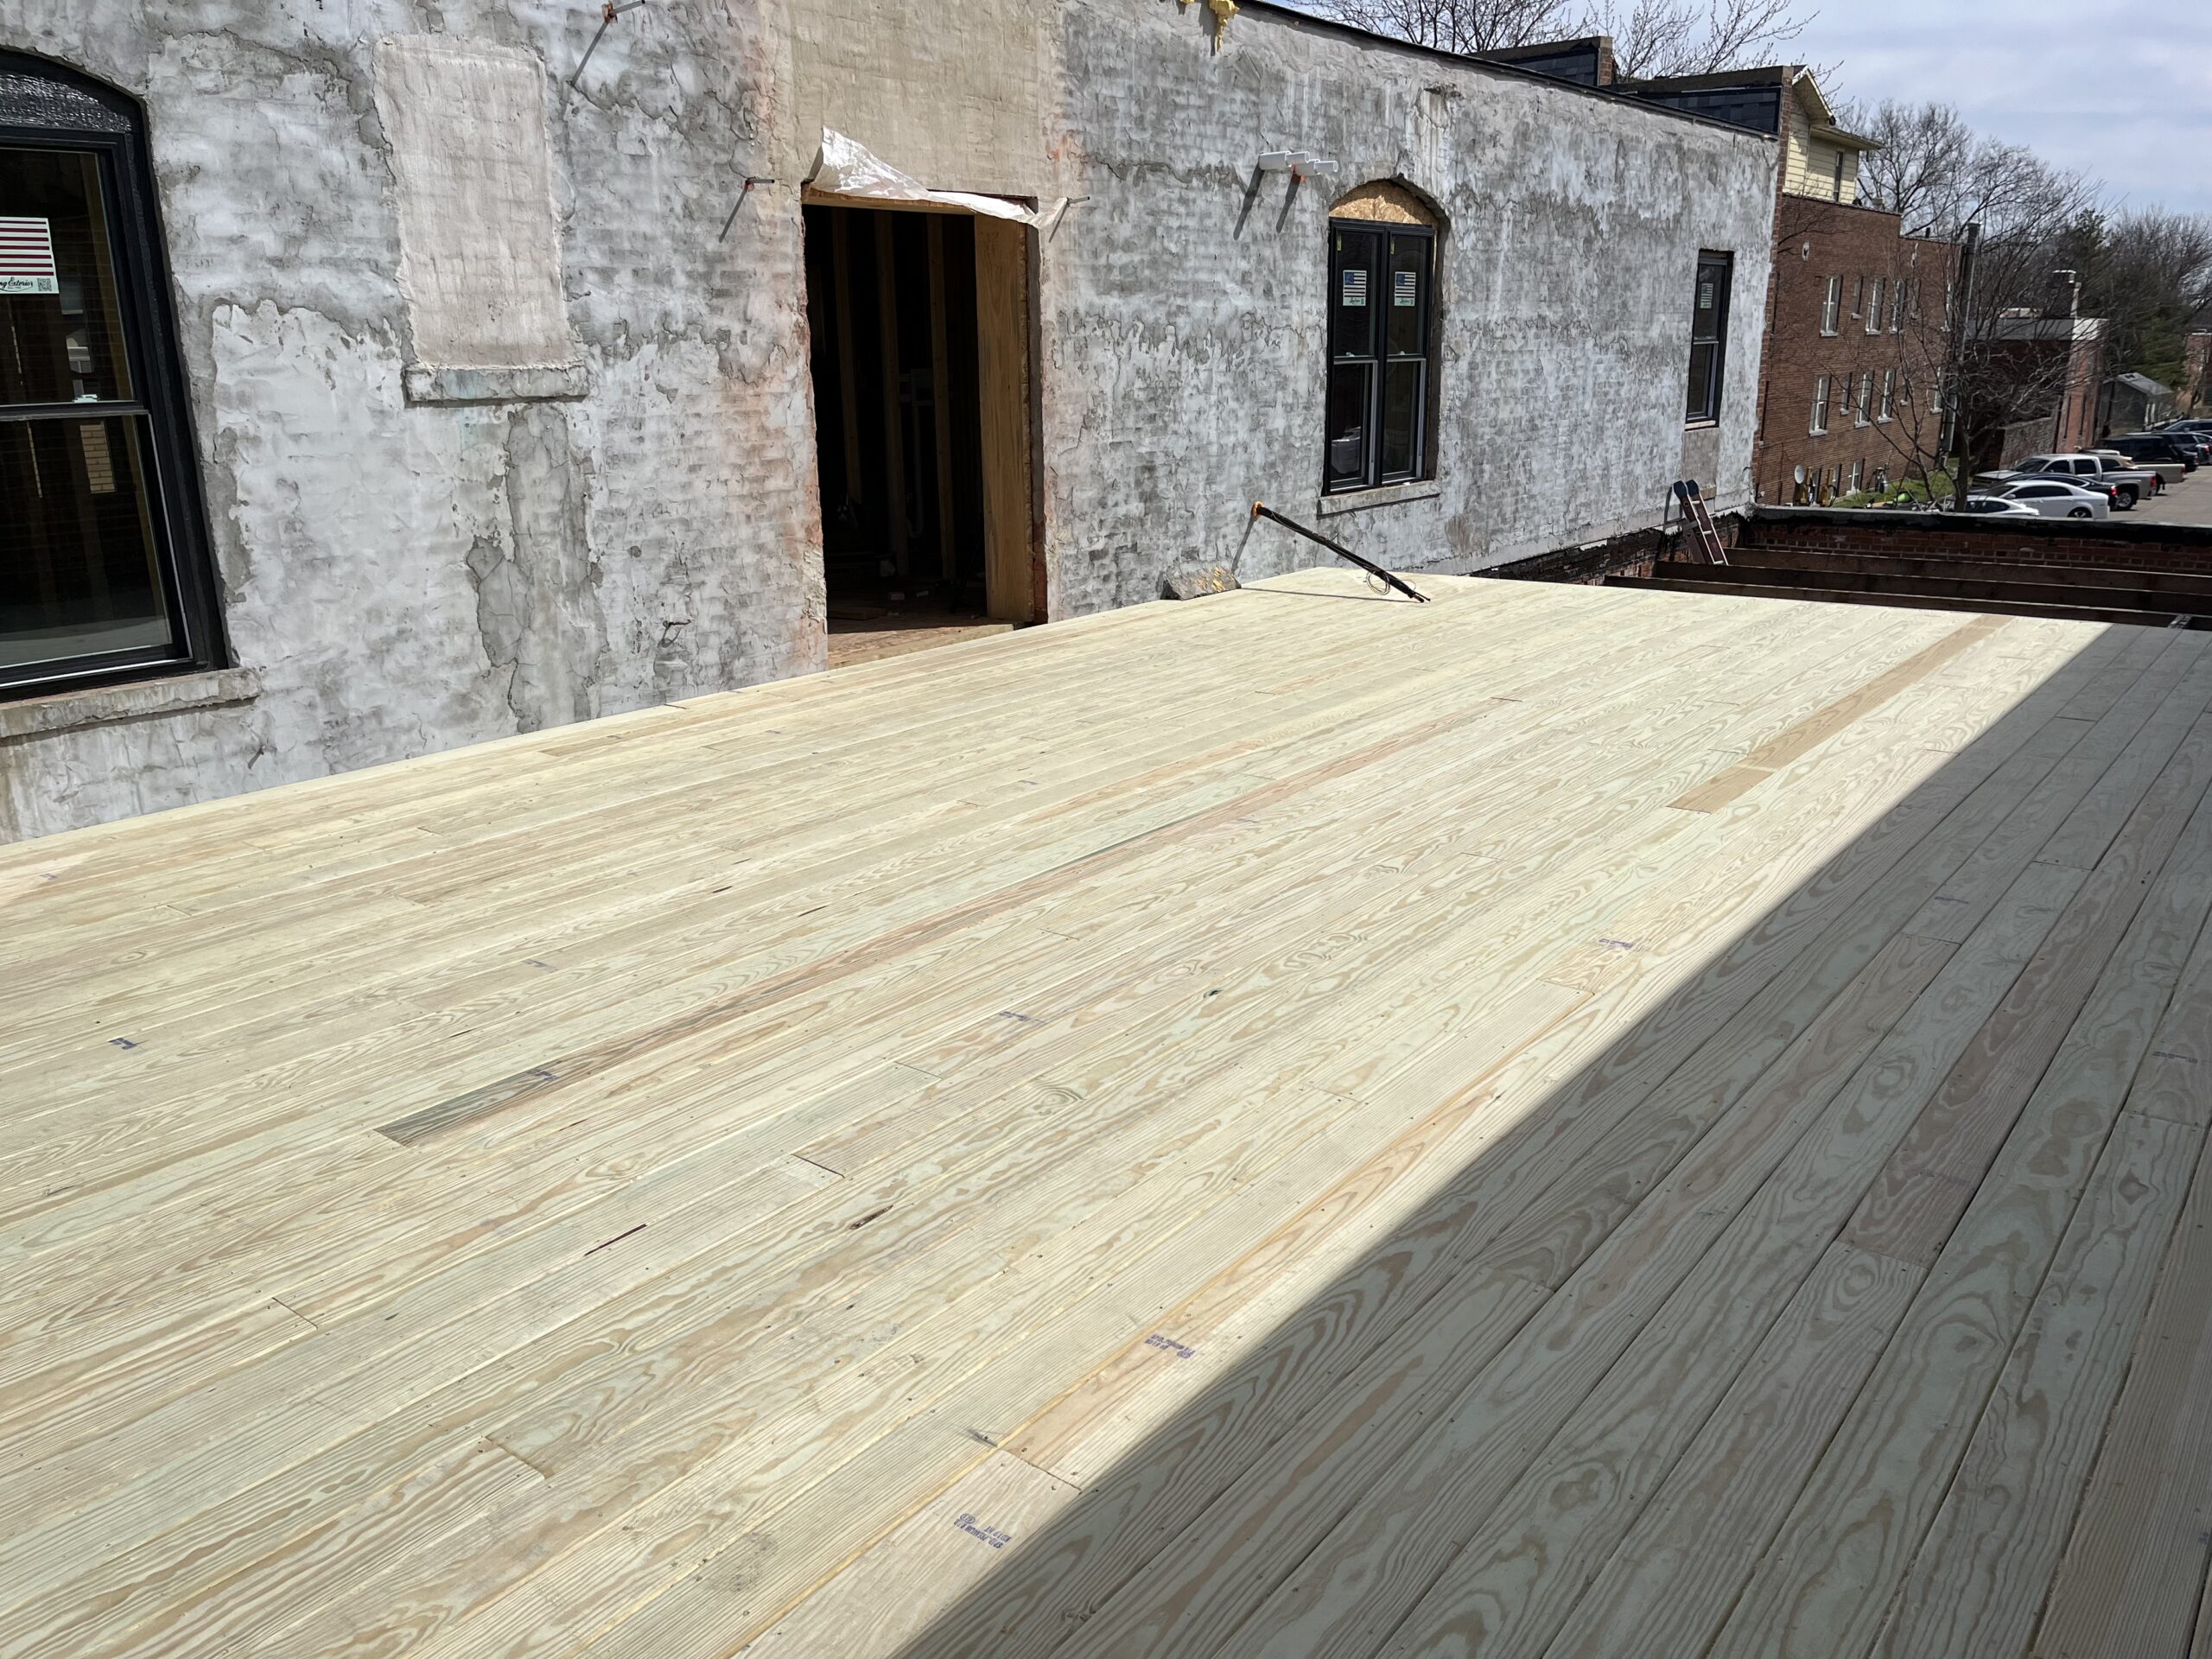 Raw wood of upper patio deck